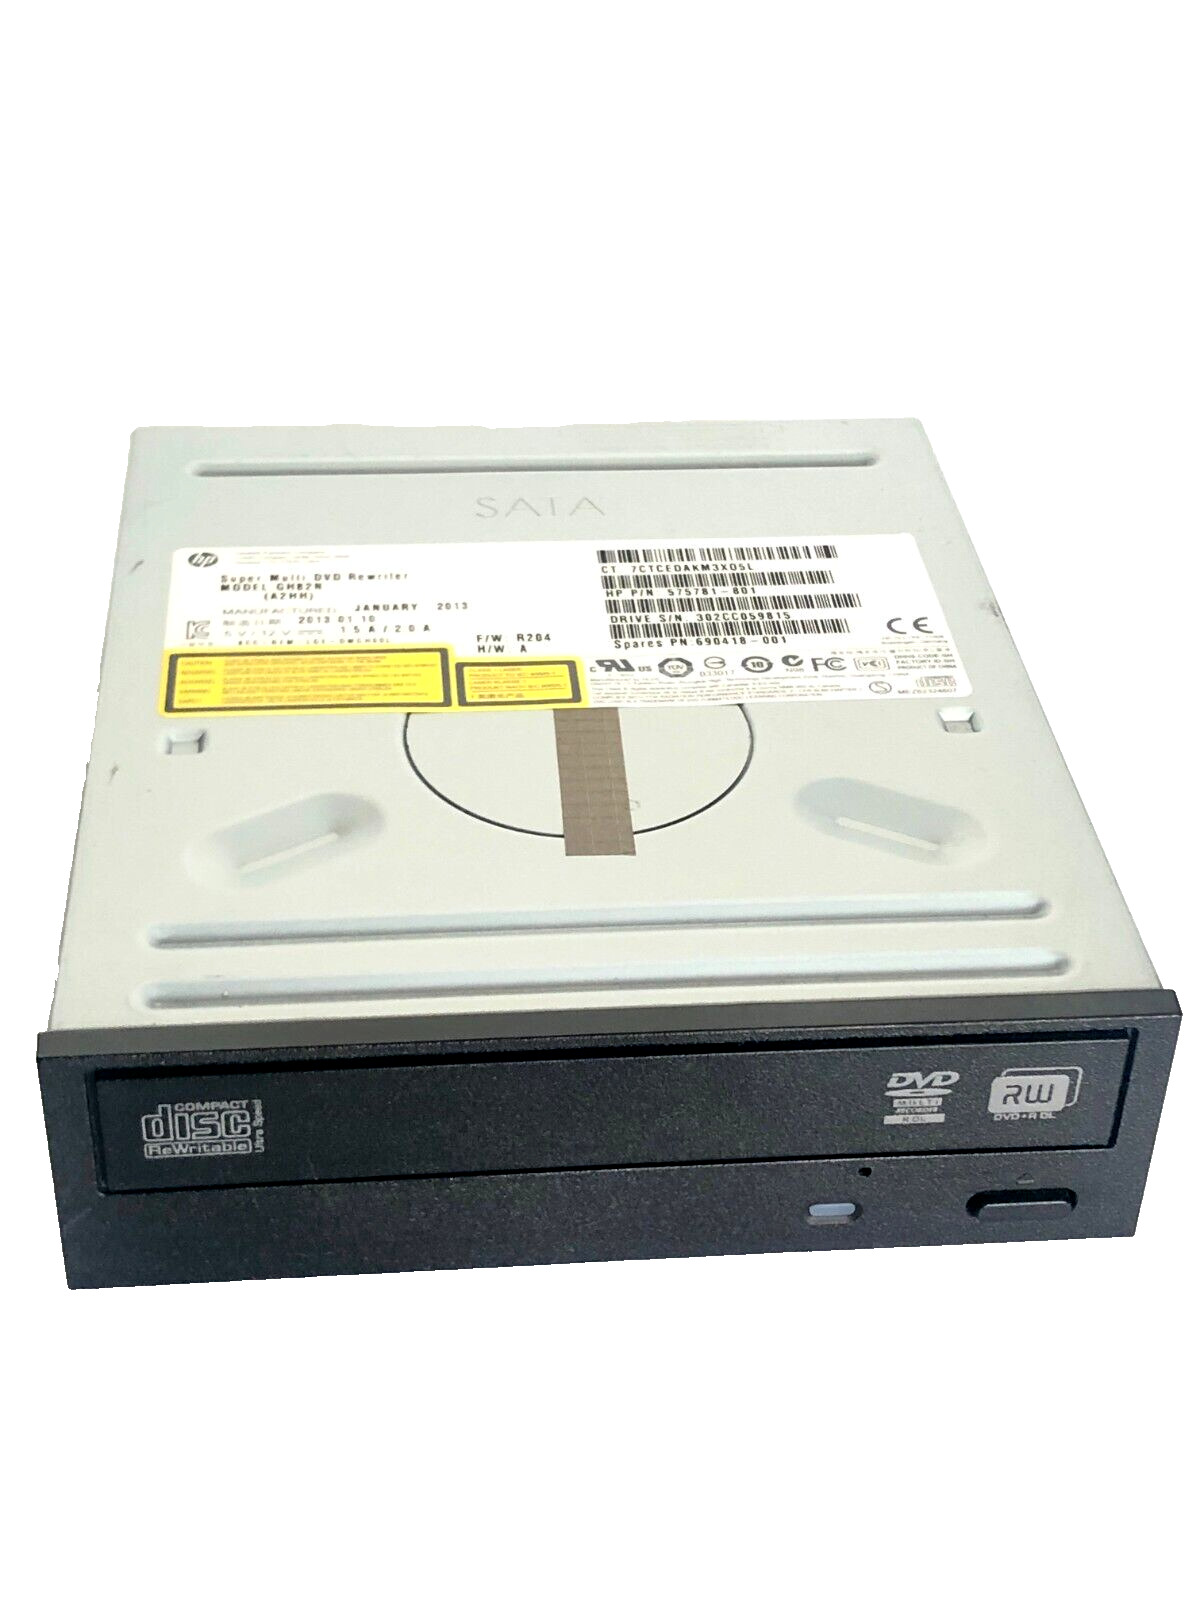 HP Super Multi DVD CD Rewriter GH82N SATA HL Data Storage Hitachi LG Dell